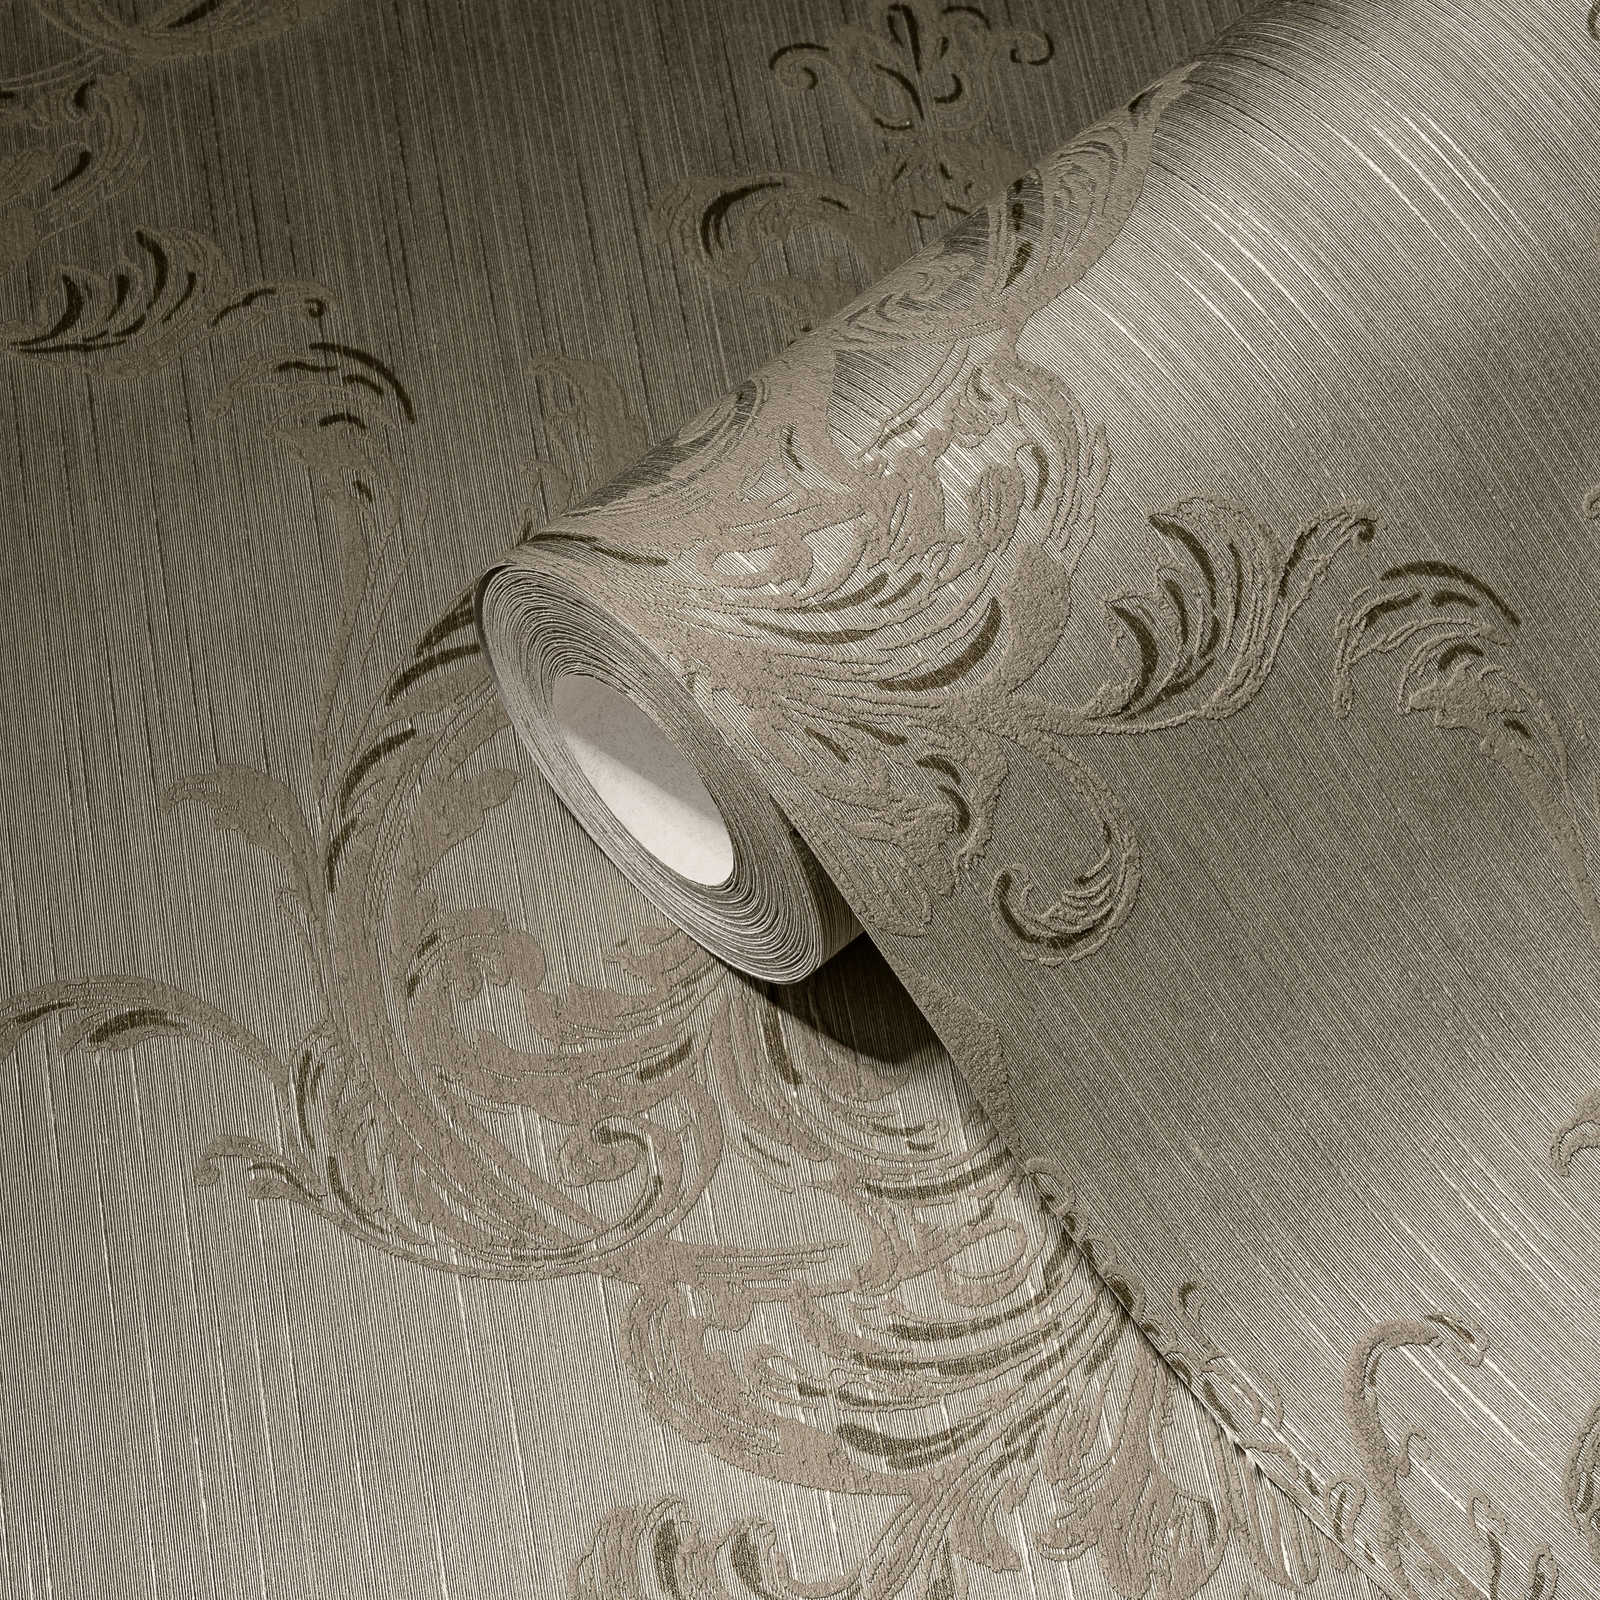             Elegante Tapete mit filigranem Ornament Design – Braun
        